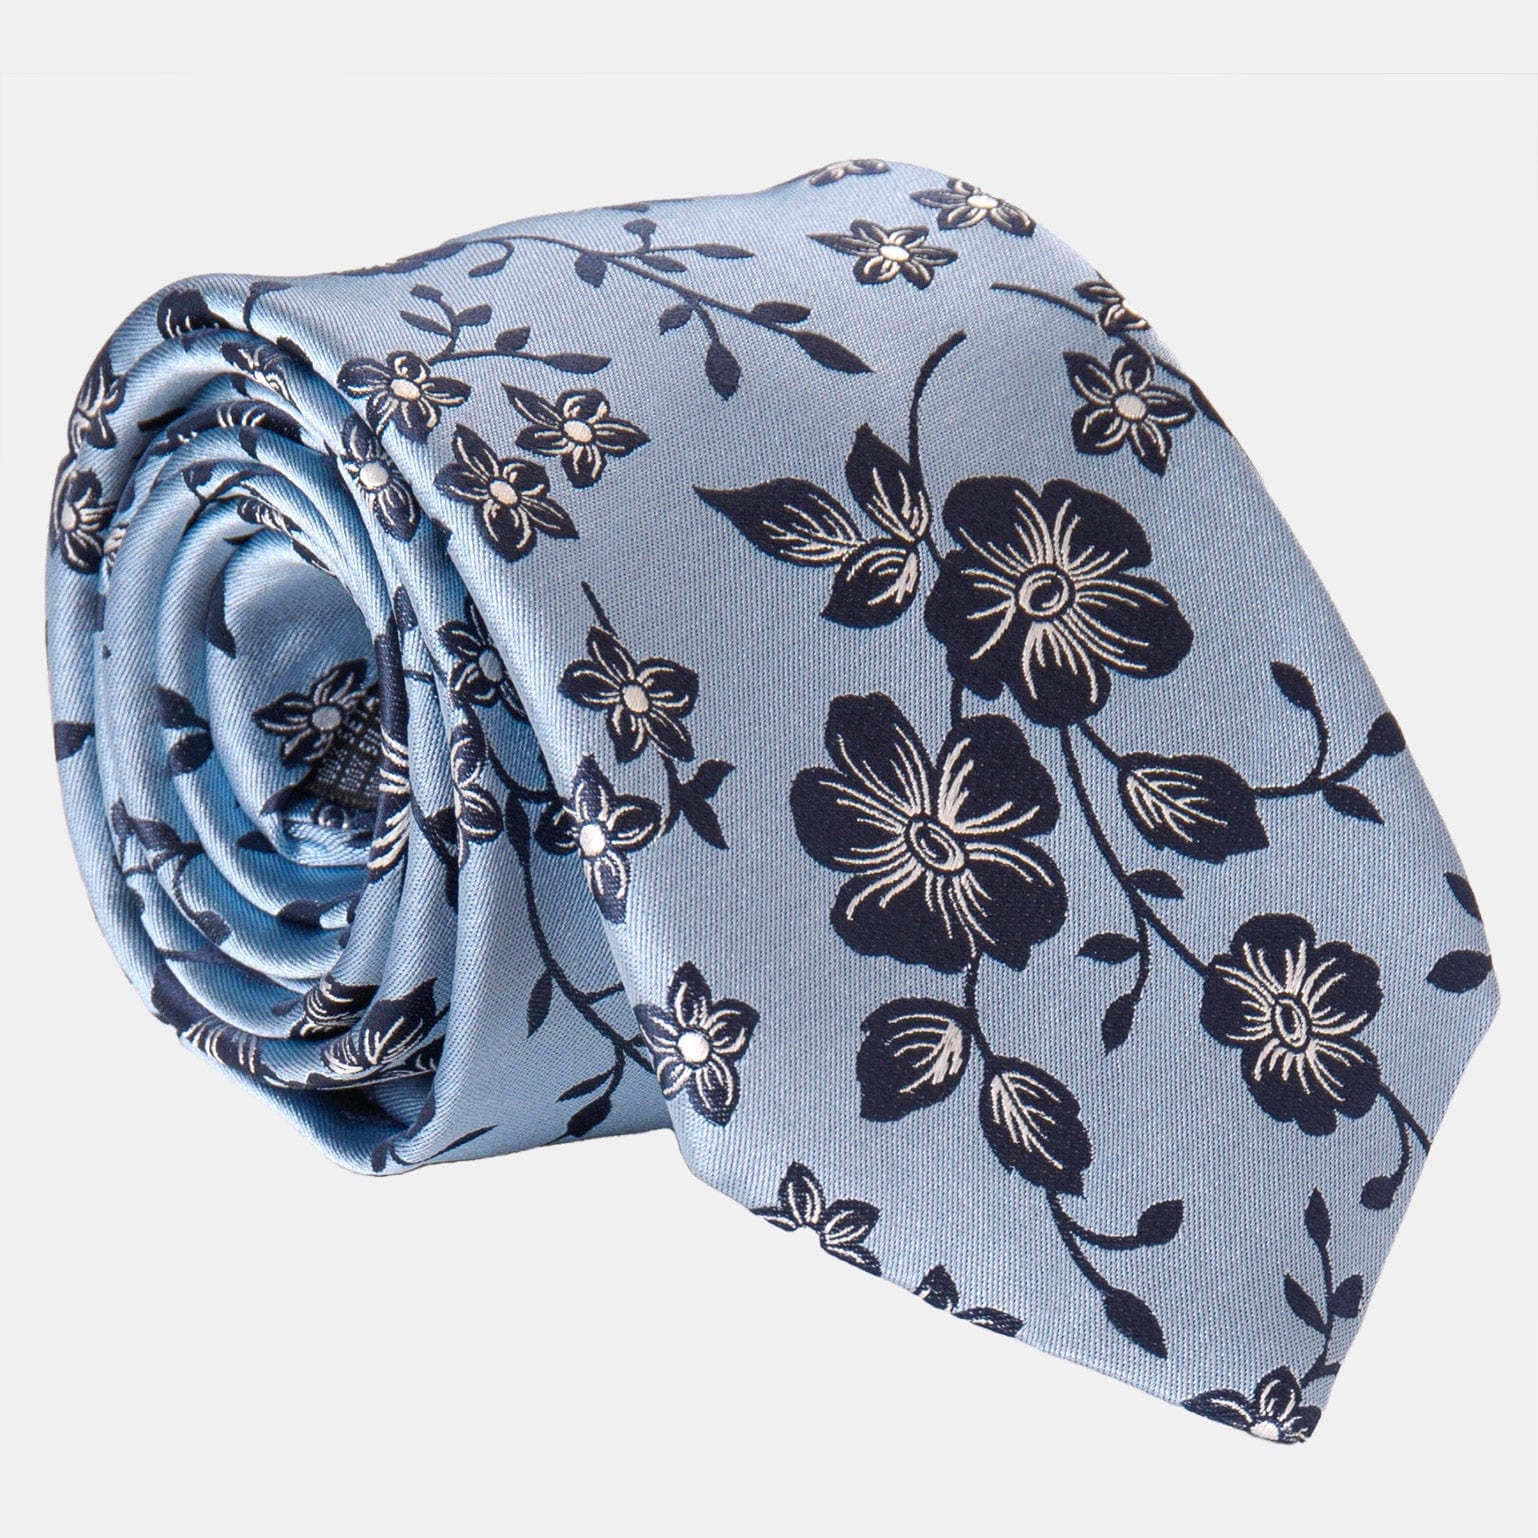 Luxury blue Italian silk tie for formal occasions